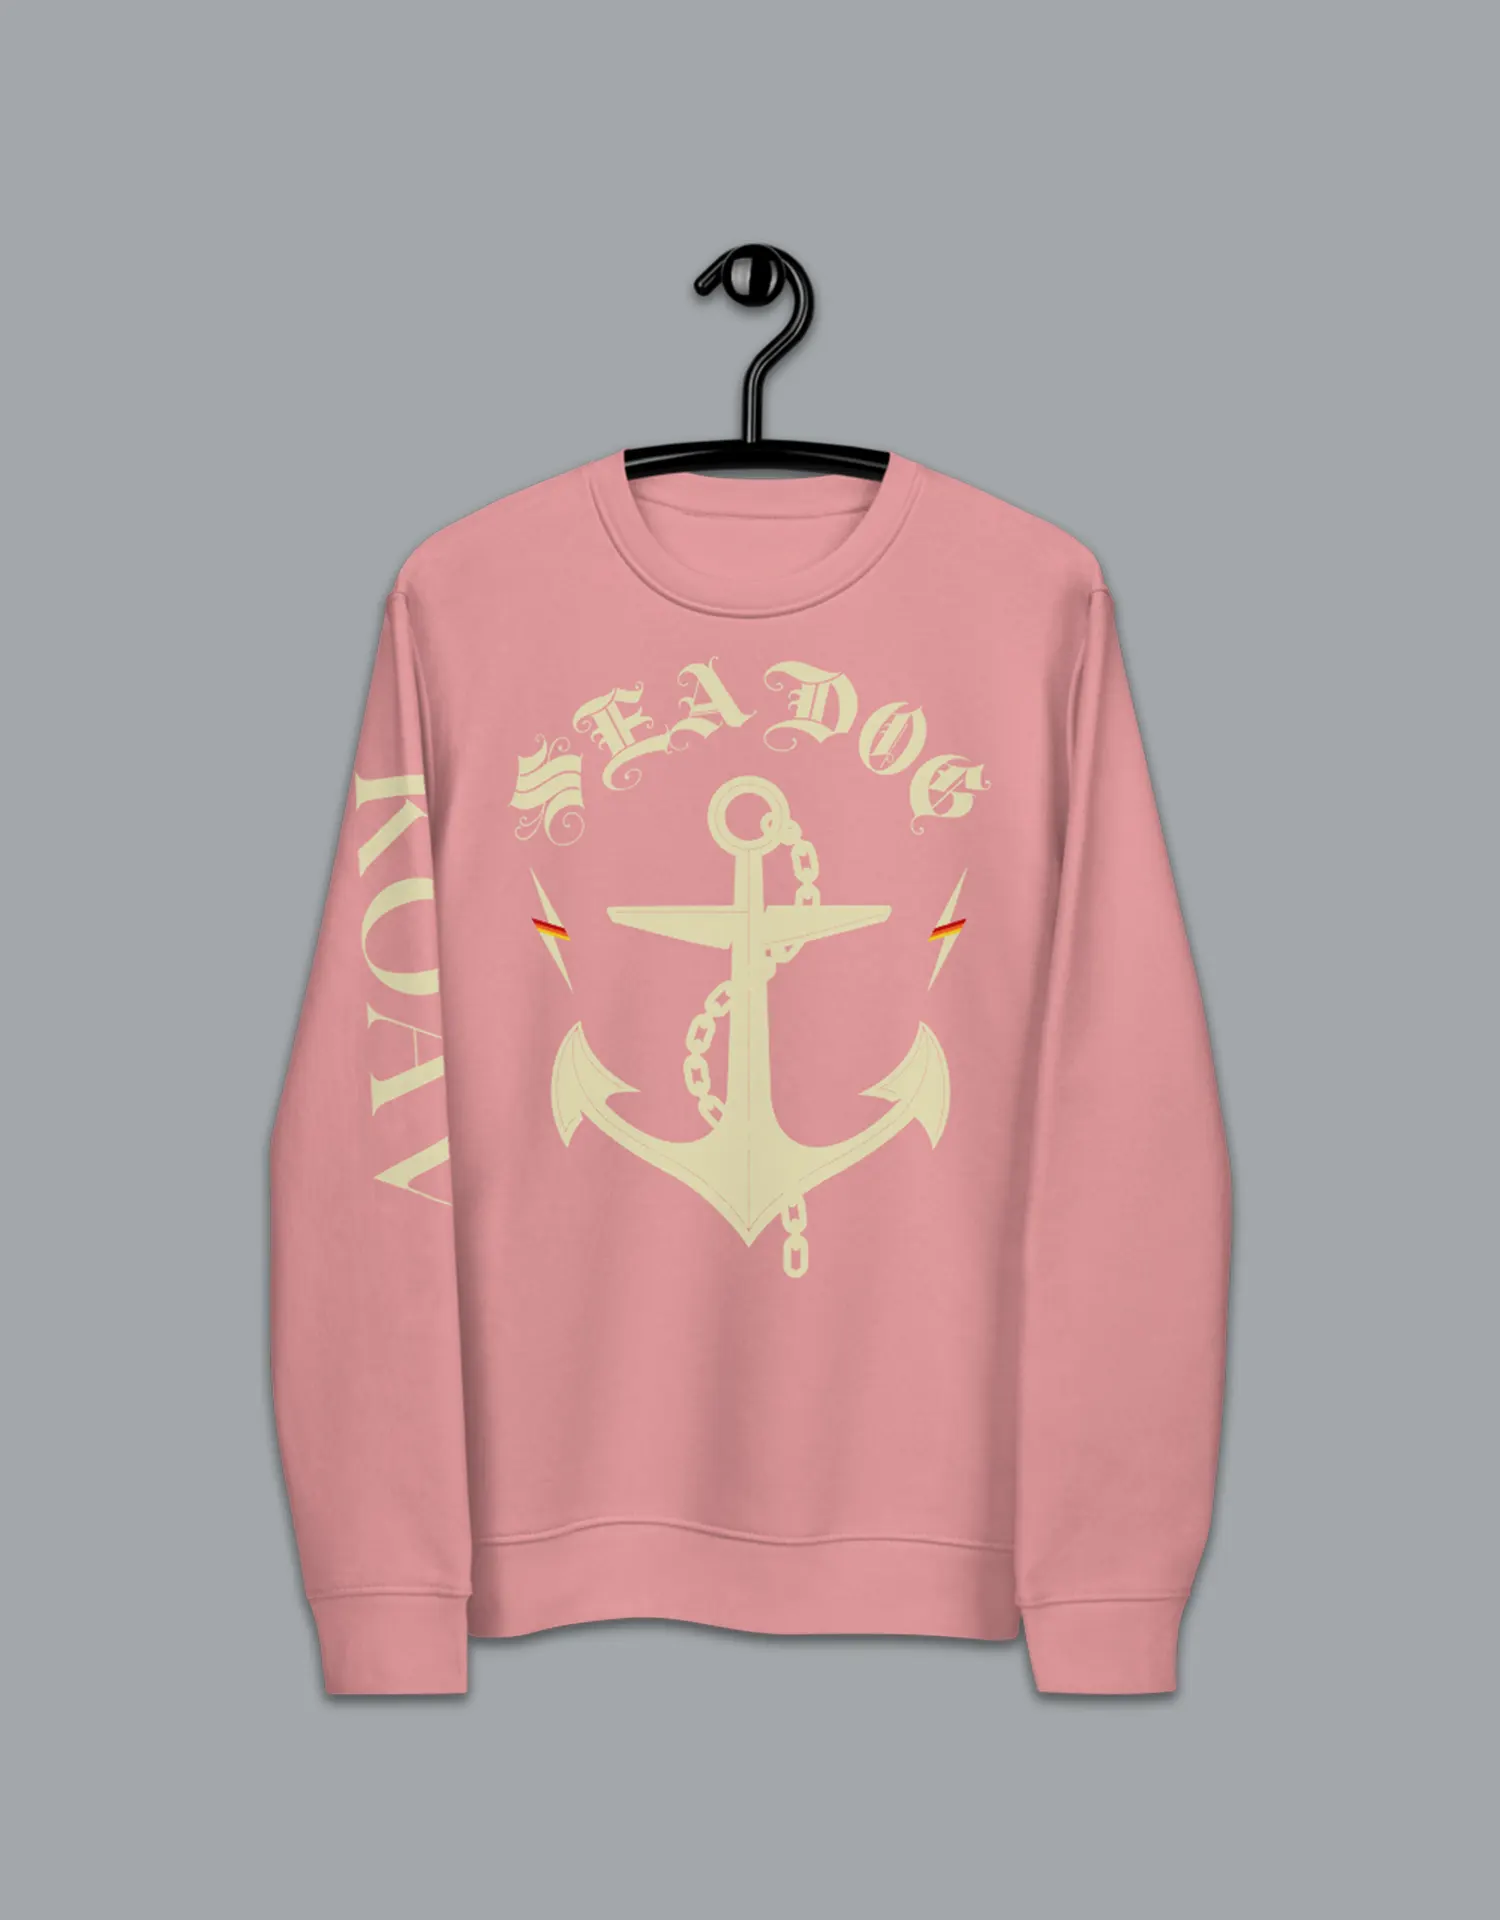 Sea Dog unisex Eco-friendly Sweater by KOAV